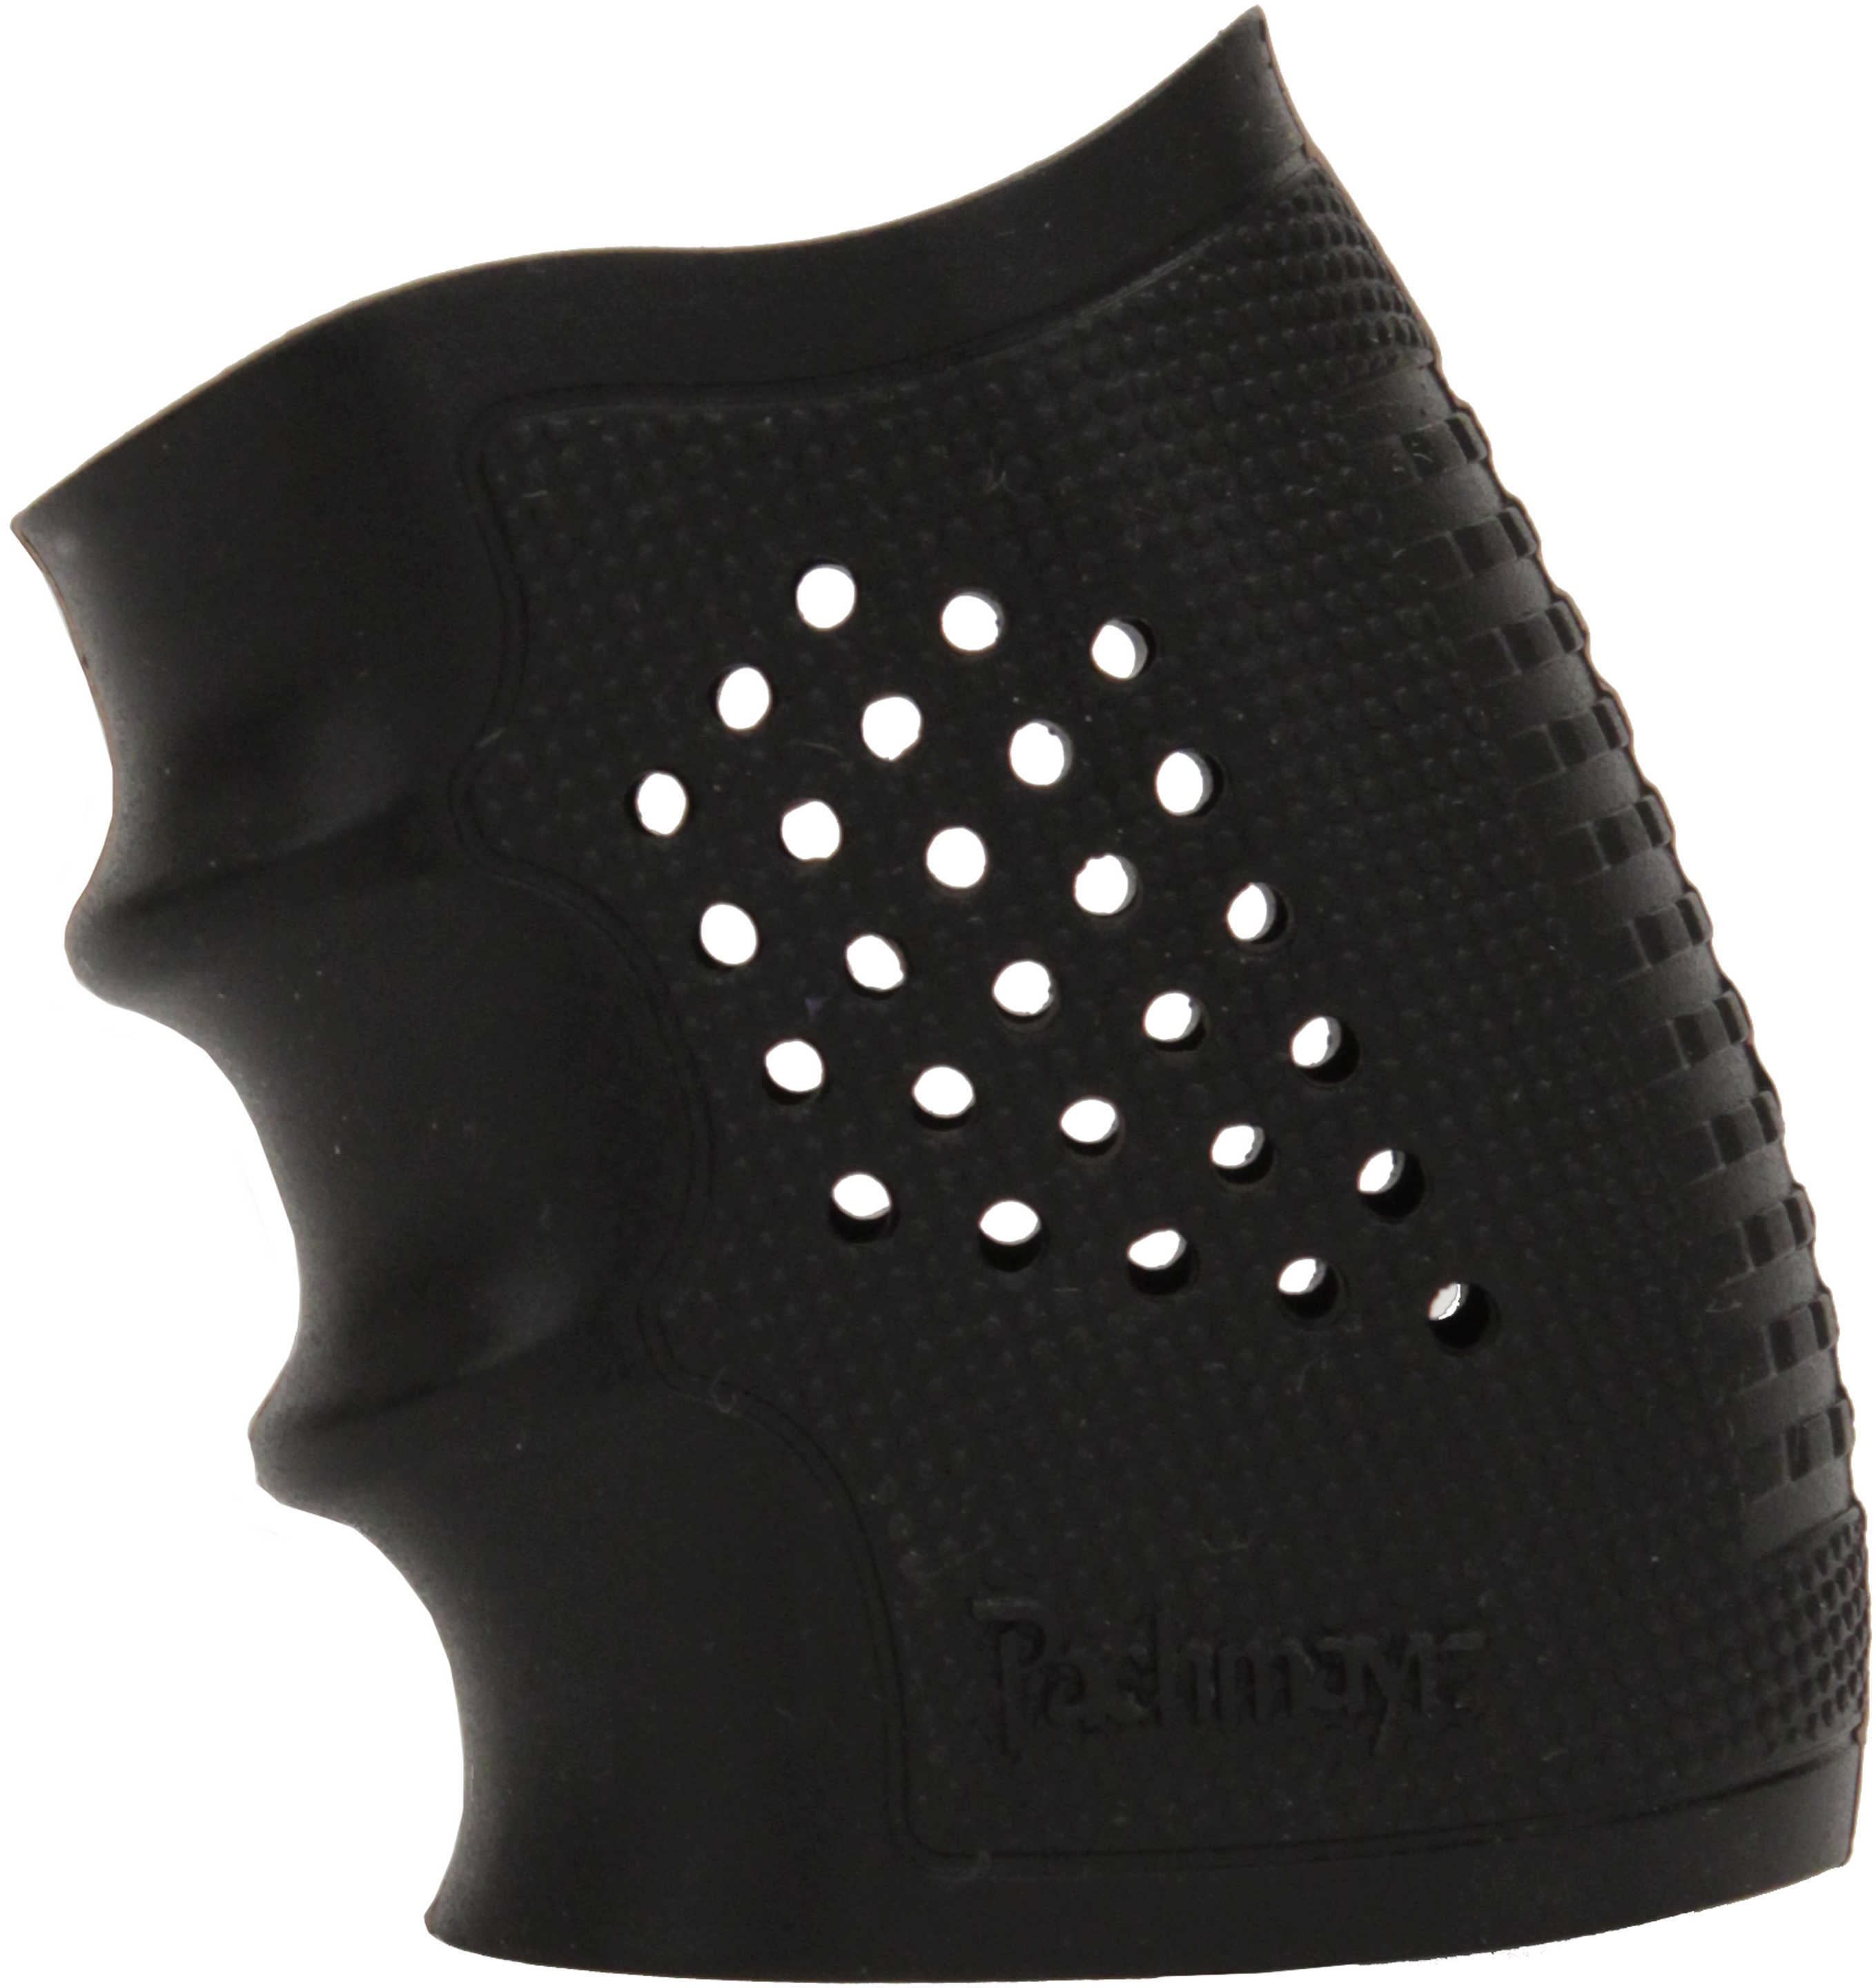 Pachmayr Tactical Grip Glove S&W M&P Series 05172